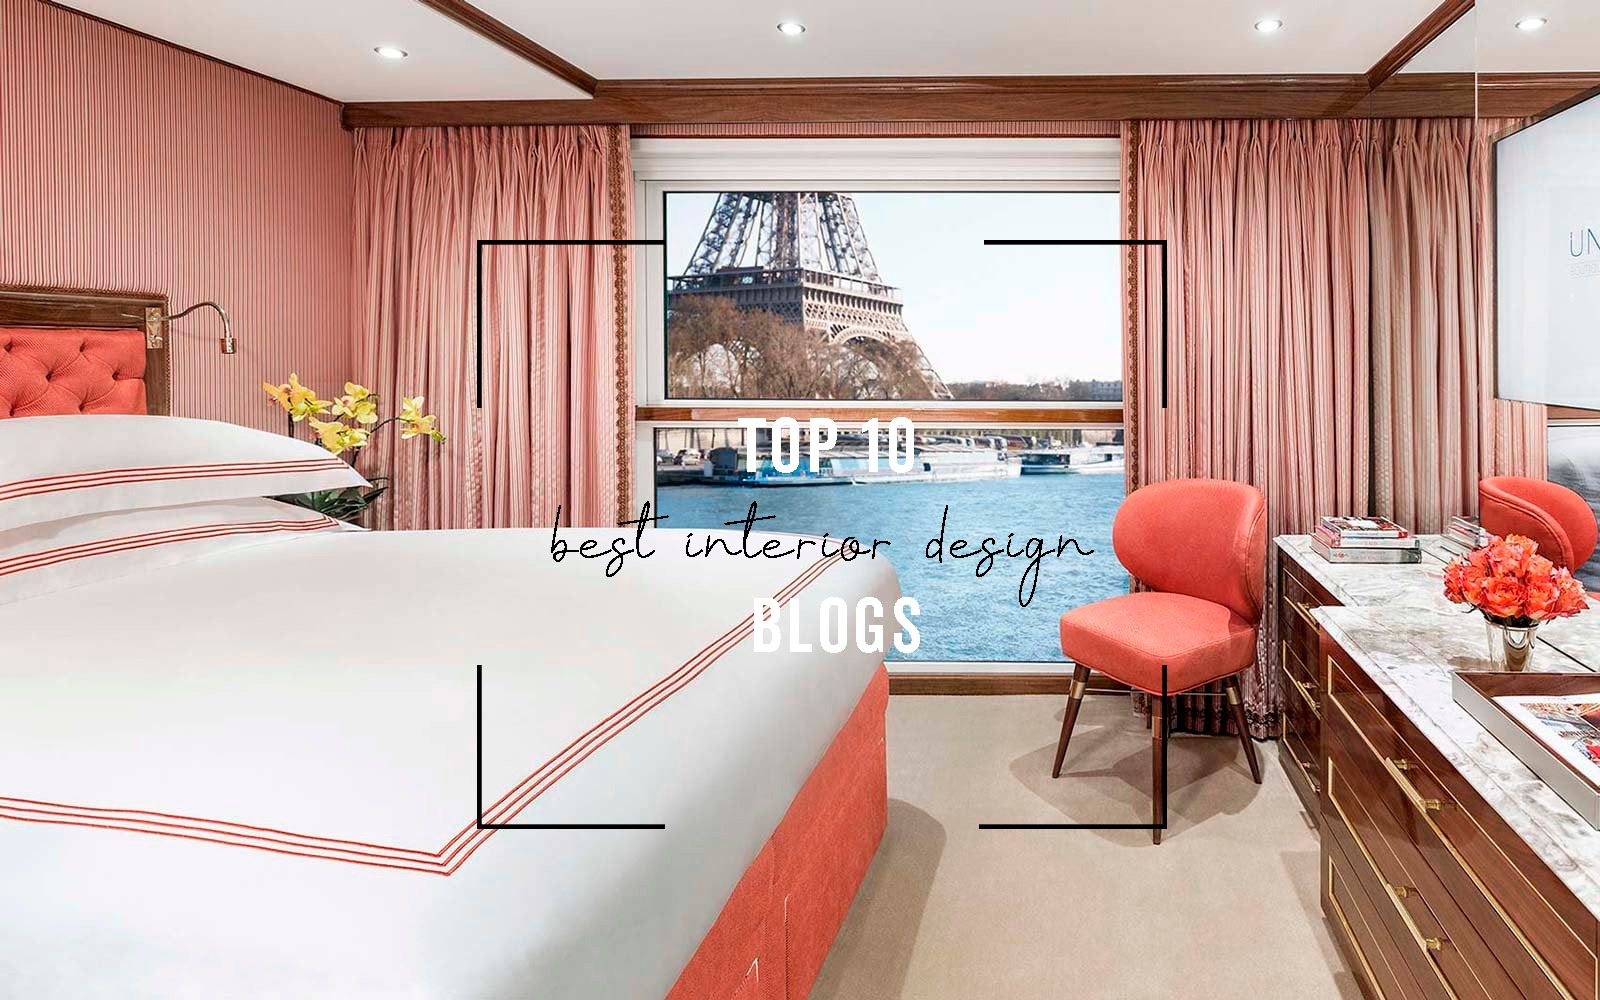 Top 10 Best Interior Design Blogs By